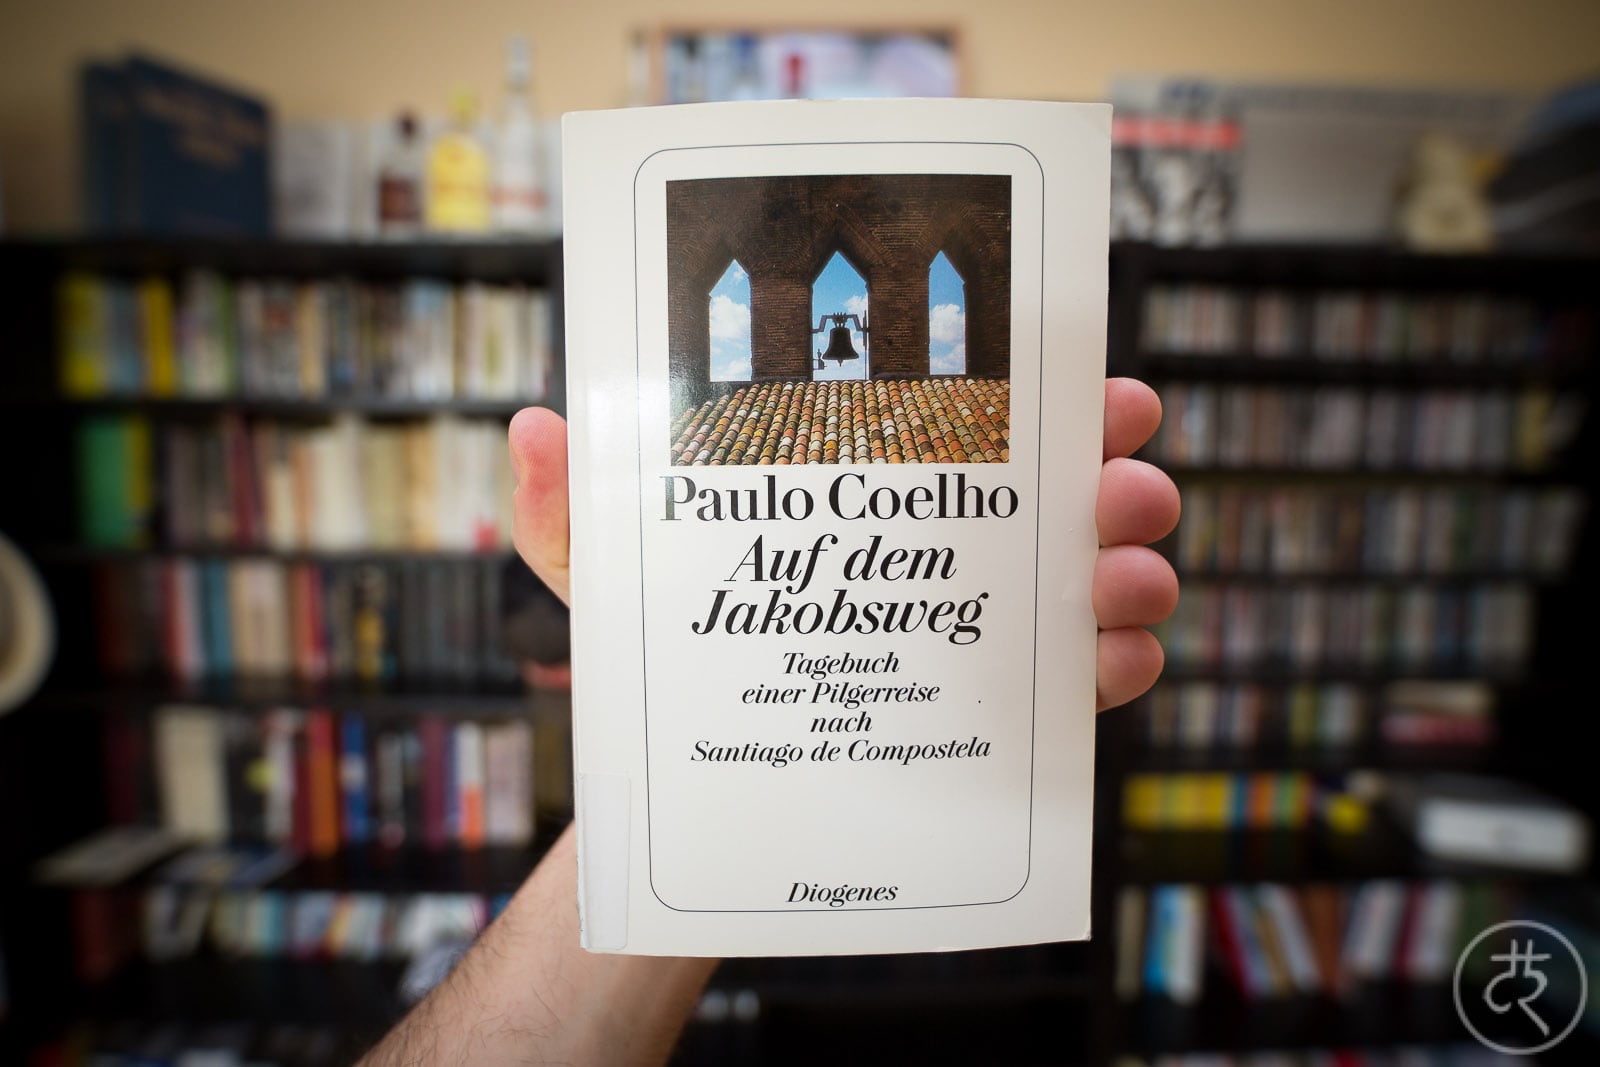 Paulo Coelho's "The Pilgrimage"